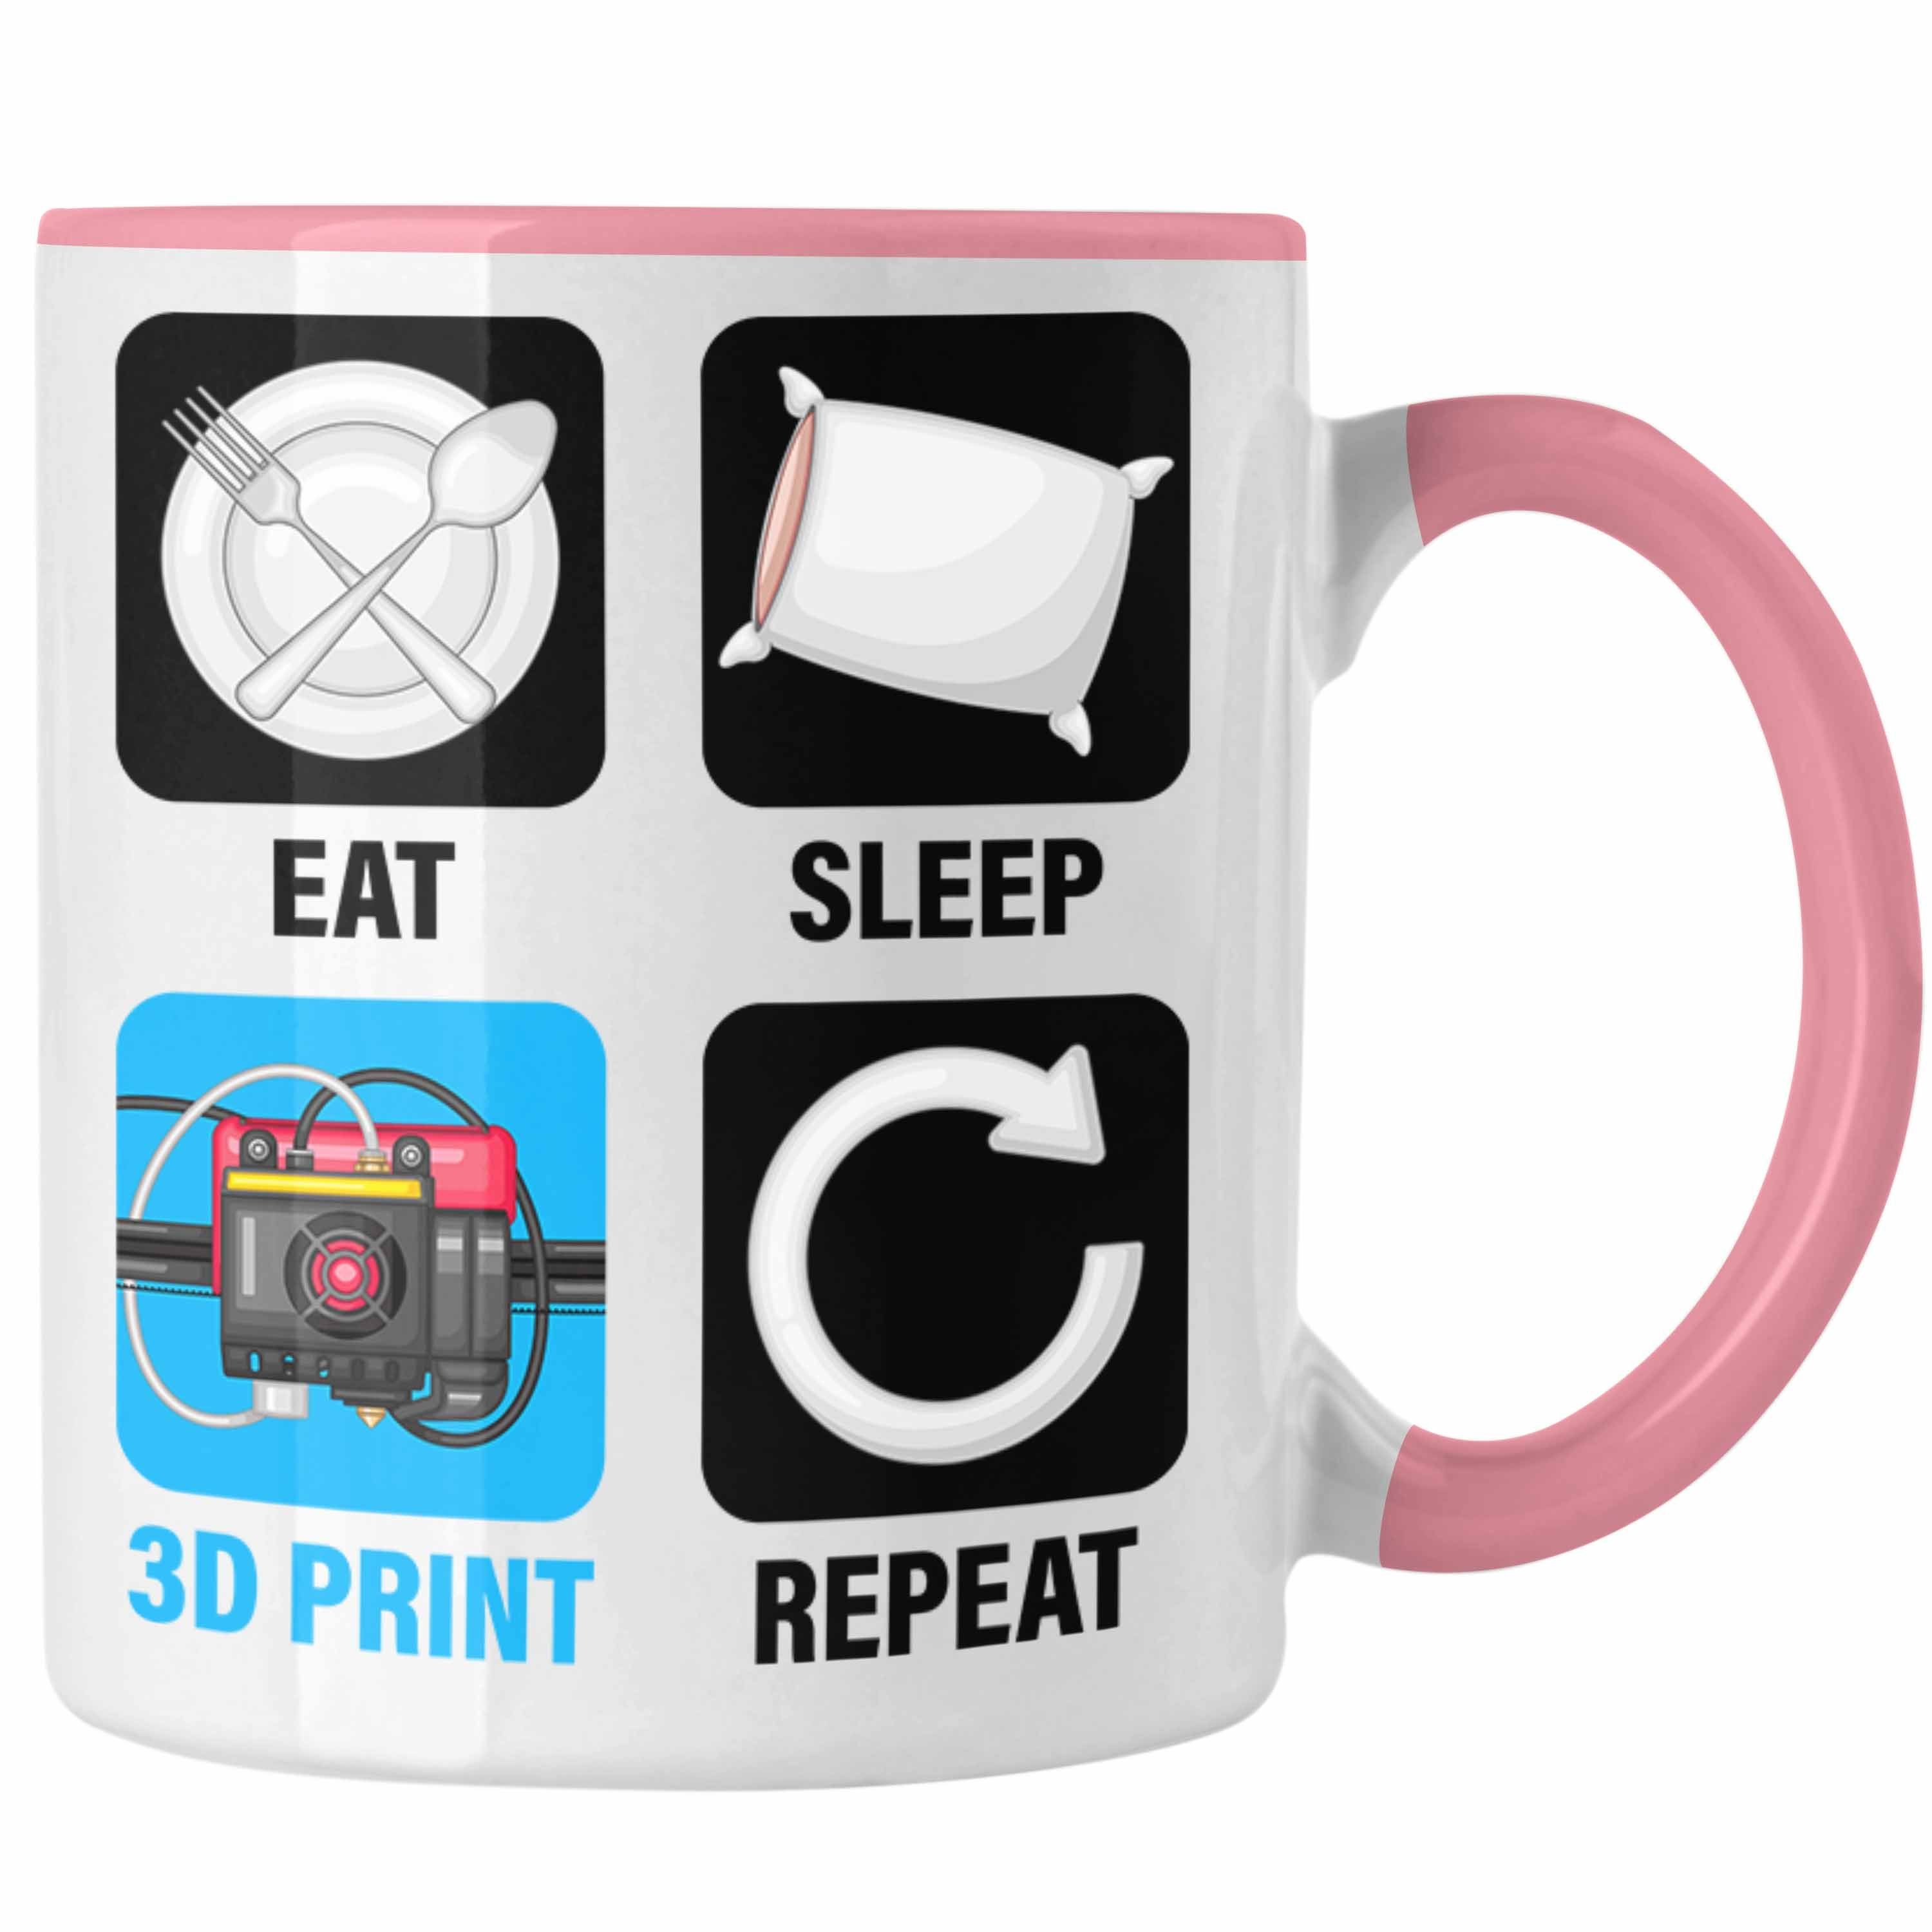 Trendation Tasse 3D Drucker Tasse Geschenk für 3D Printing Eat Sleep 3D Print Repeat Mä Rosa